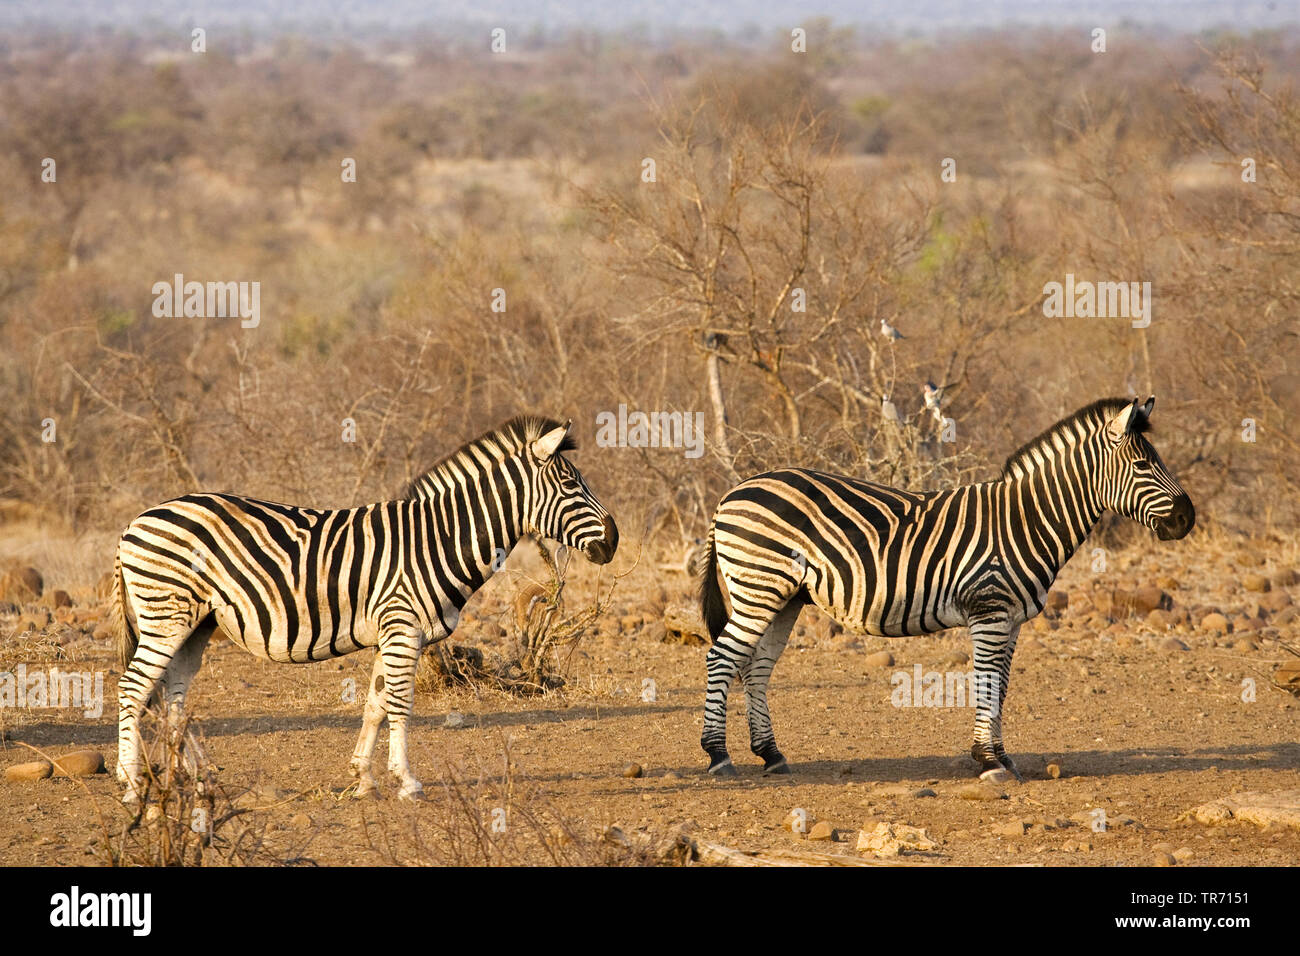 Burchell's zebra, zebra, Common zebra (Equus quagga burchelli, Equus burchelli), two zebras in savanah, South Africa, Krueger National Park Stock Photo